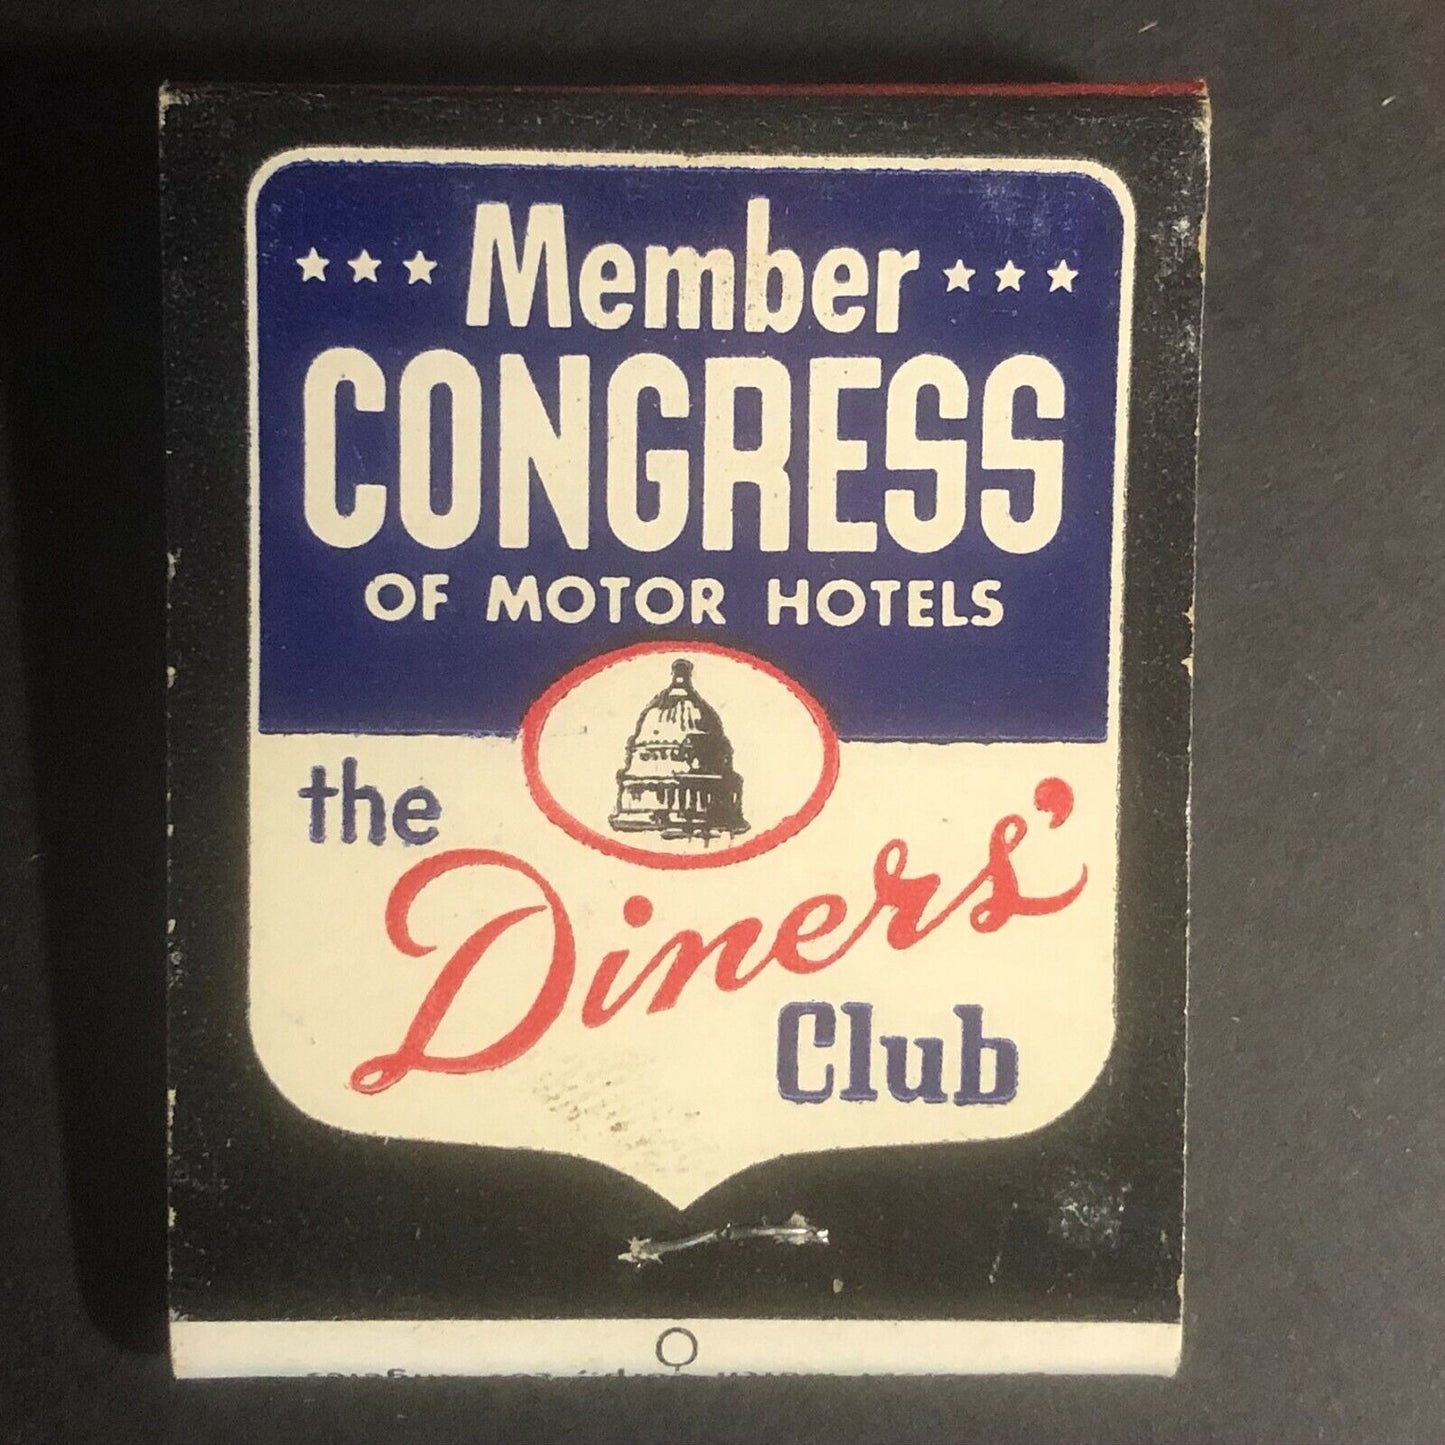 Scarce 1940's-50's Full Matchbook "Annapolis Motel Company"  "Member Congress"